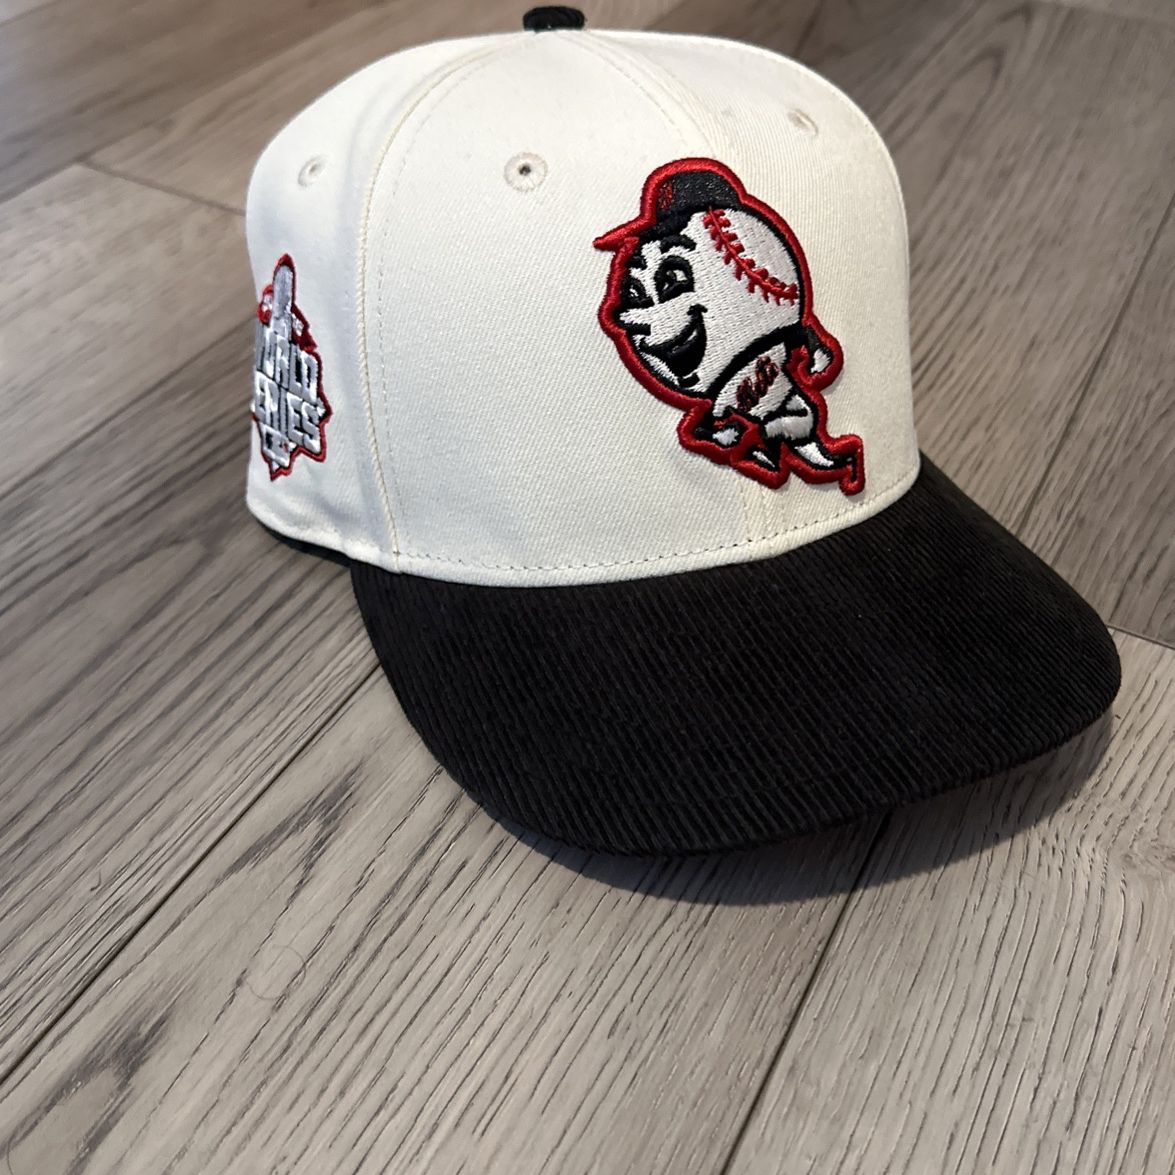 Philadelphia 76ers Hat Size 7 5/8 for Sale in Bellerose, NY - OfferUp